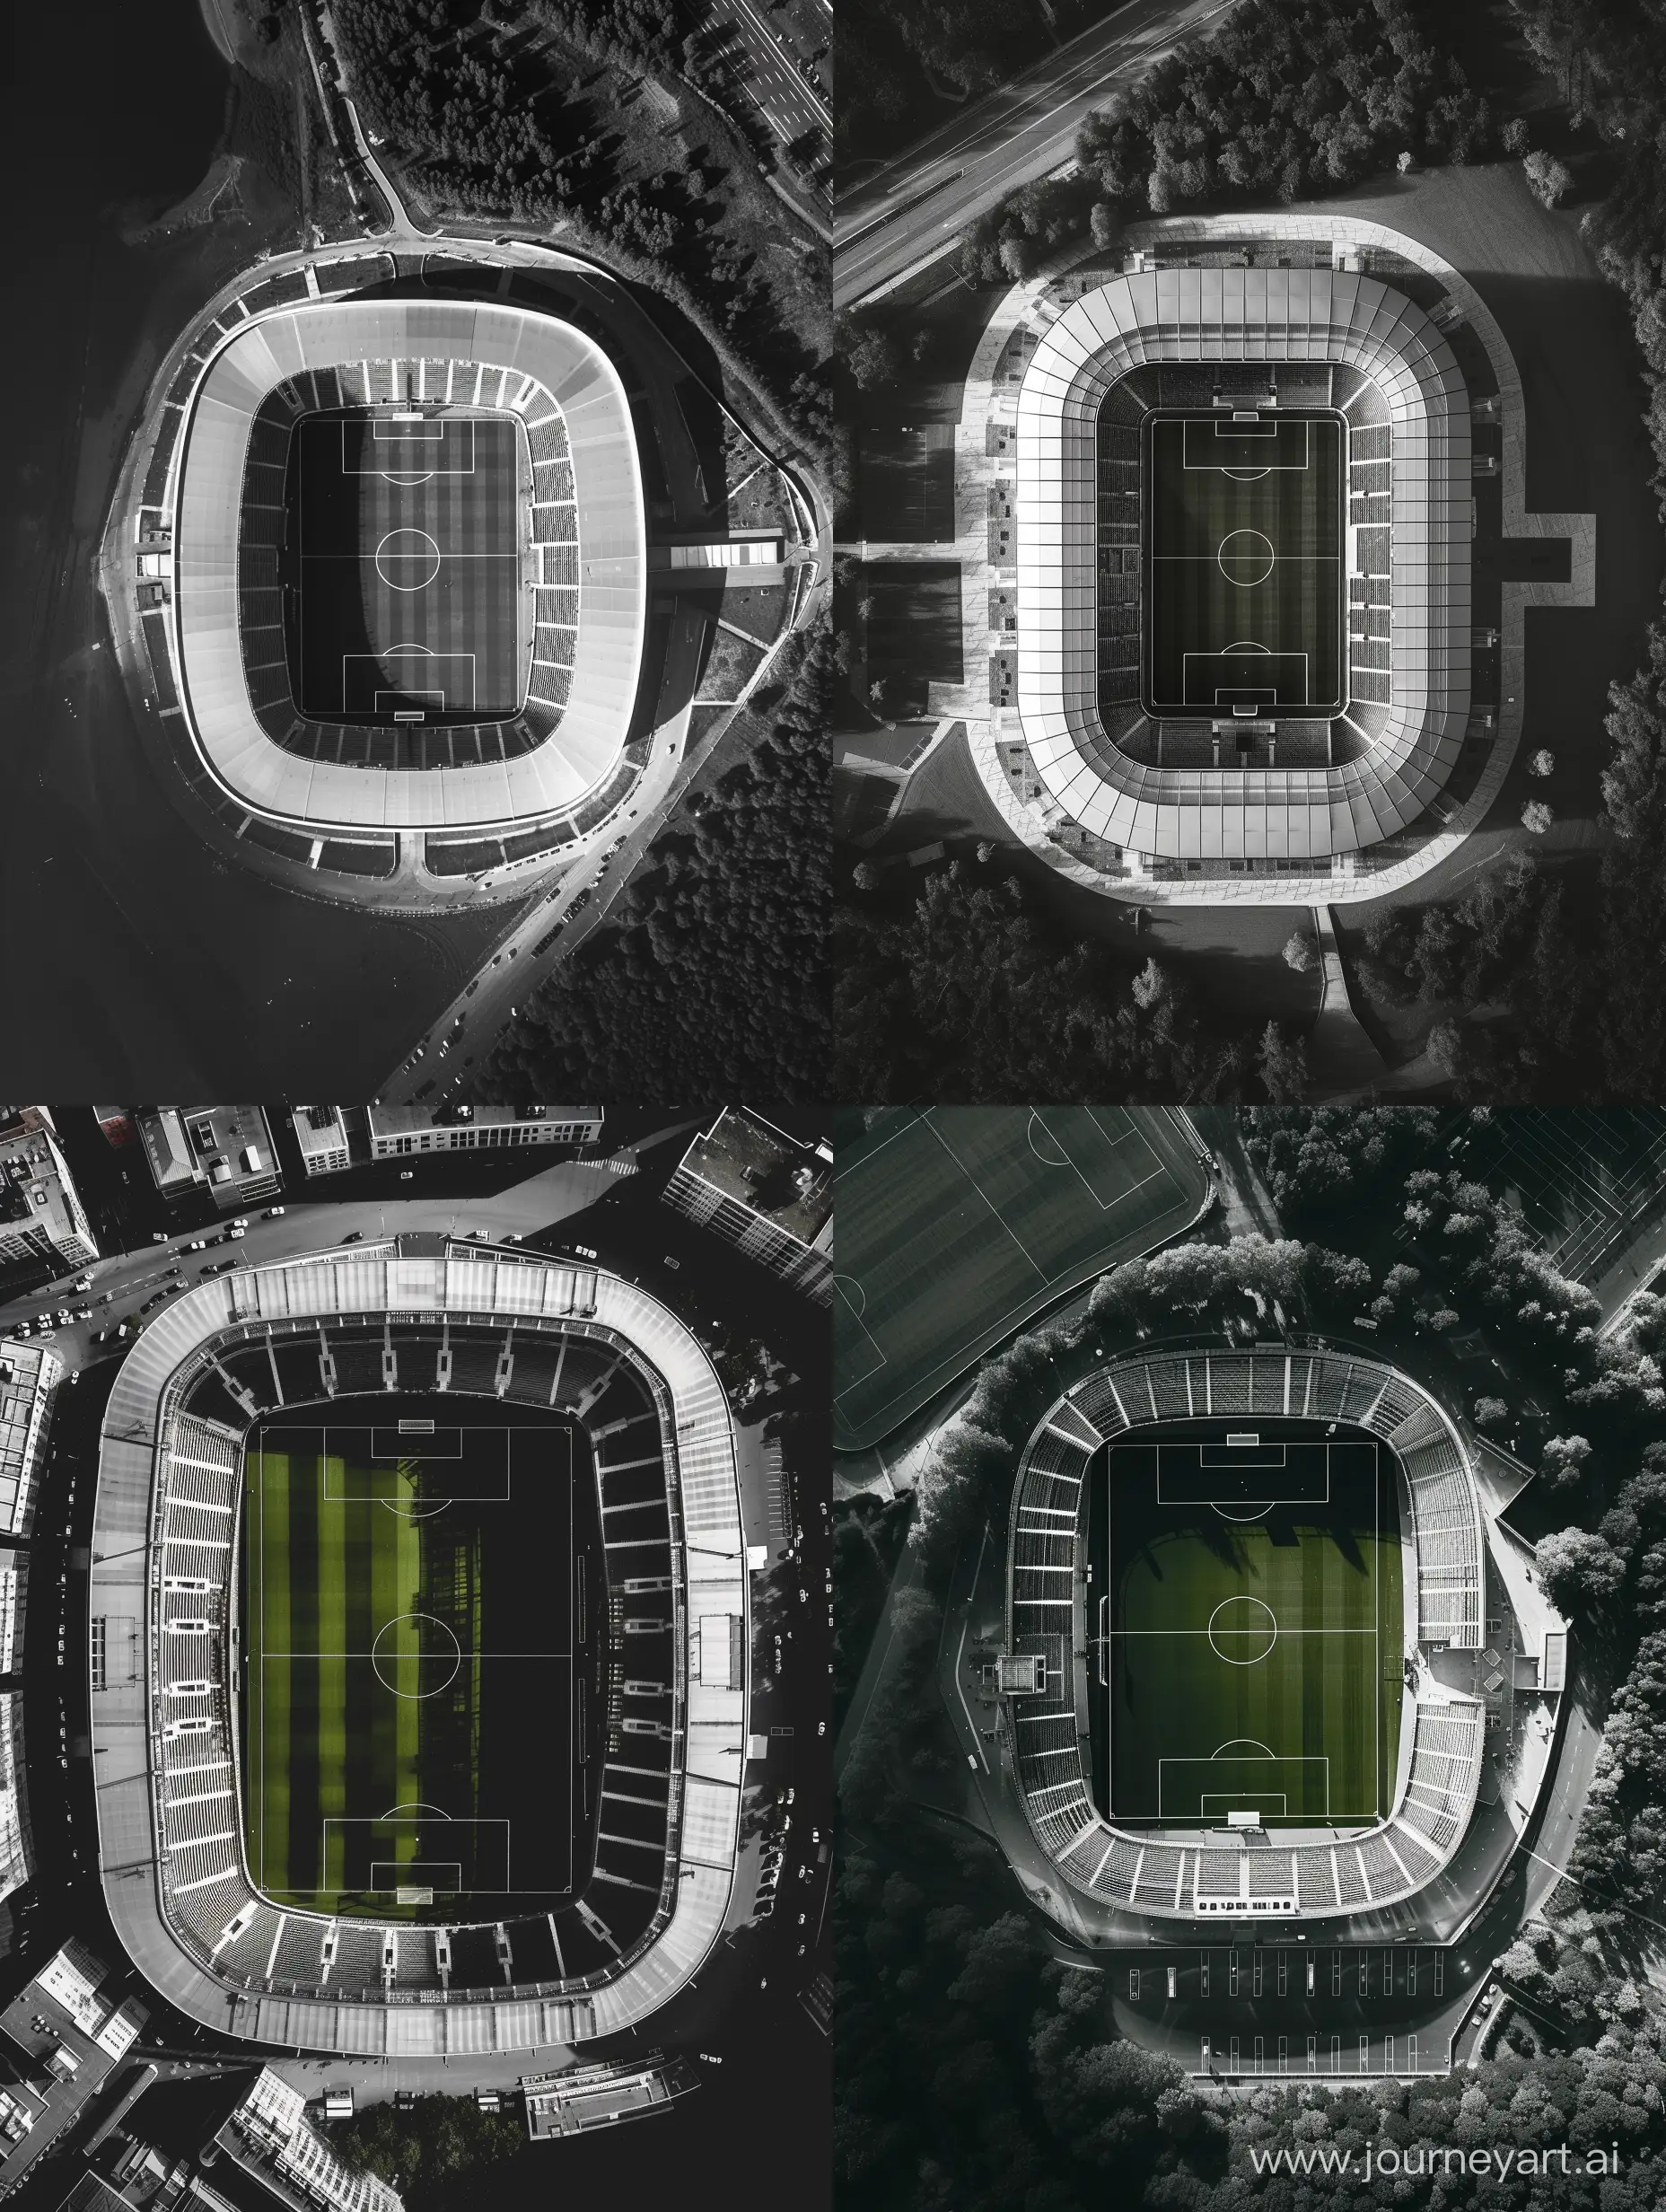 Modern-Soccer-Stadium-Aerial-View-in-Striking-Black-and-White